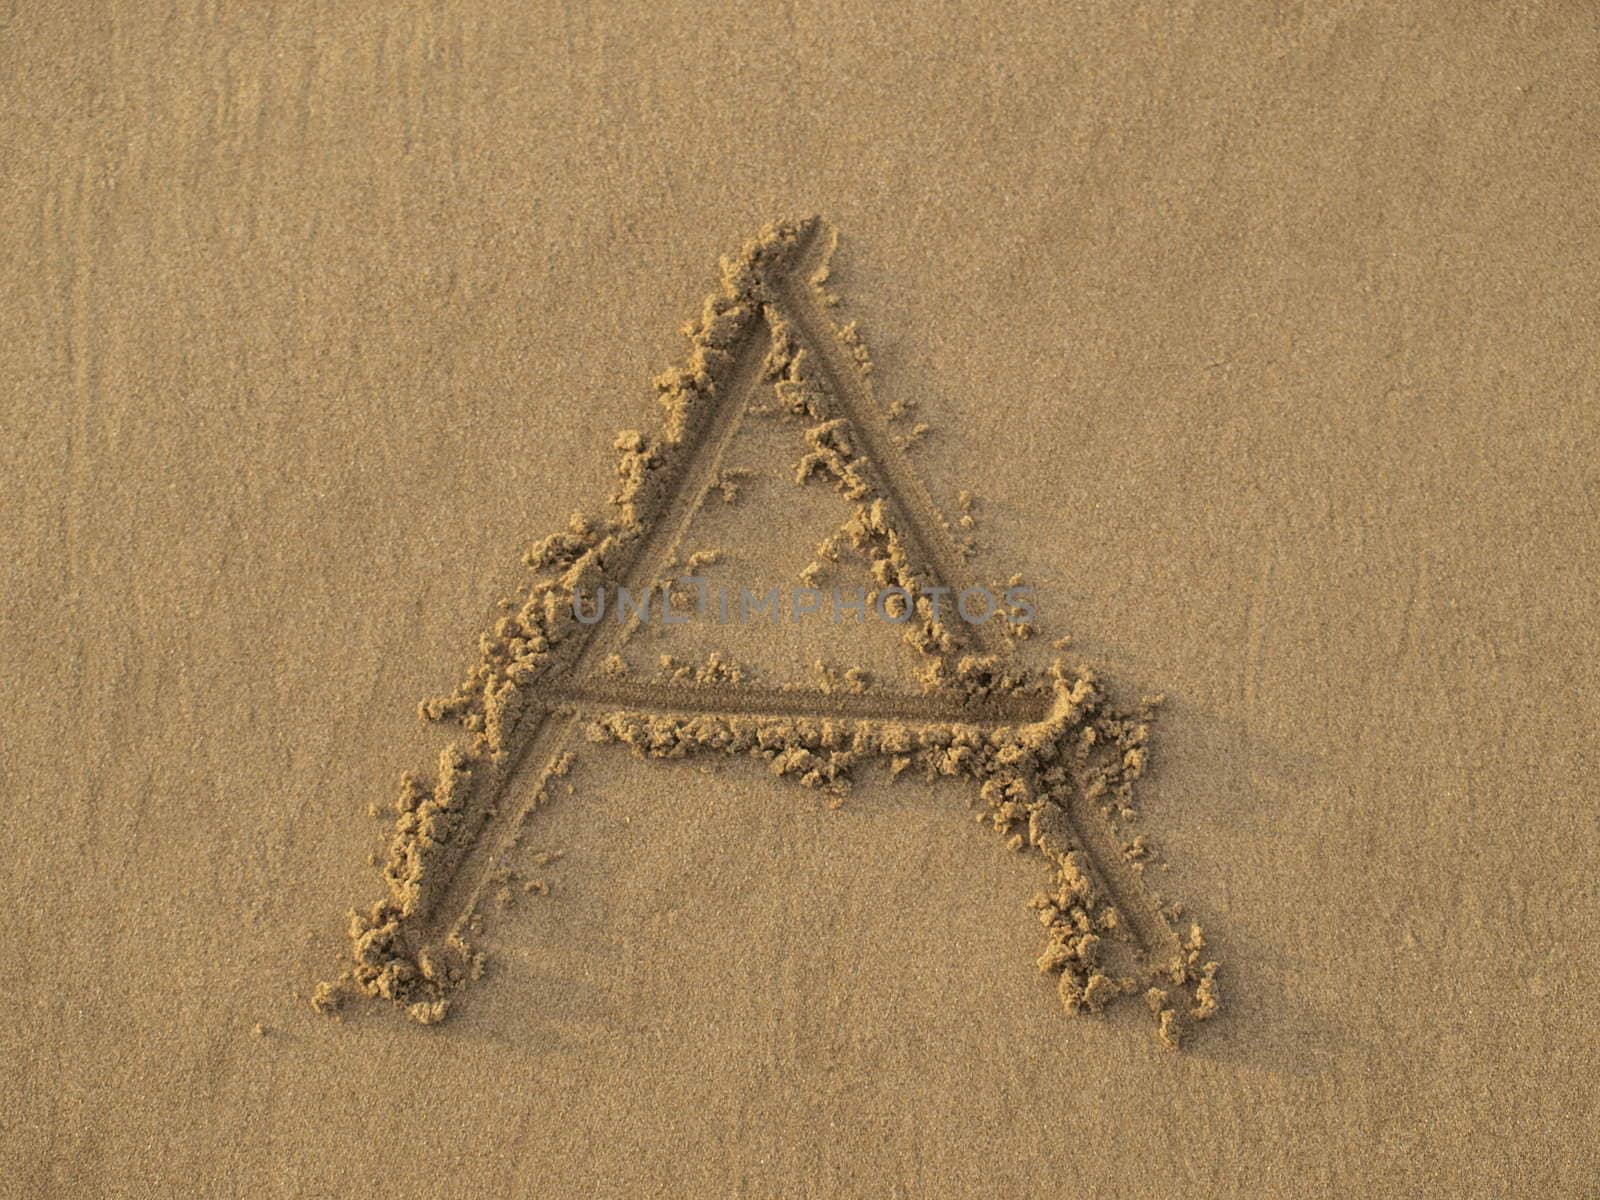 Letter A written on the beach by Alminaite